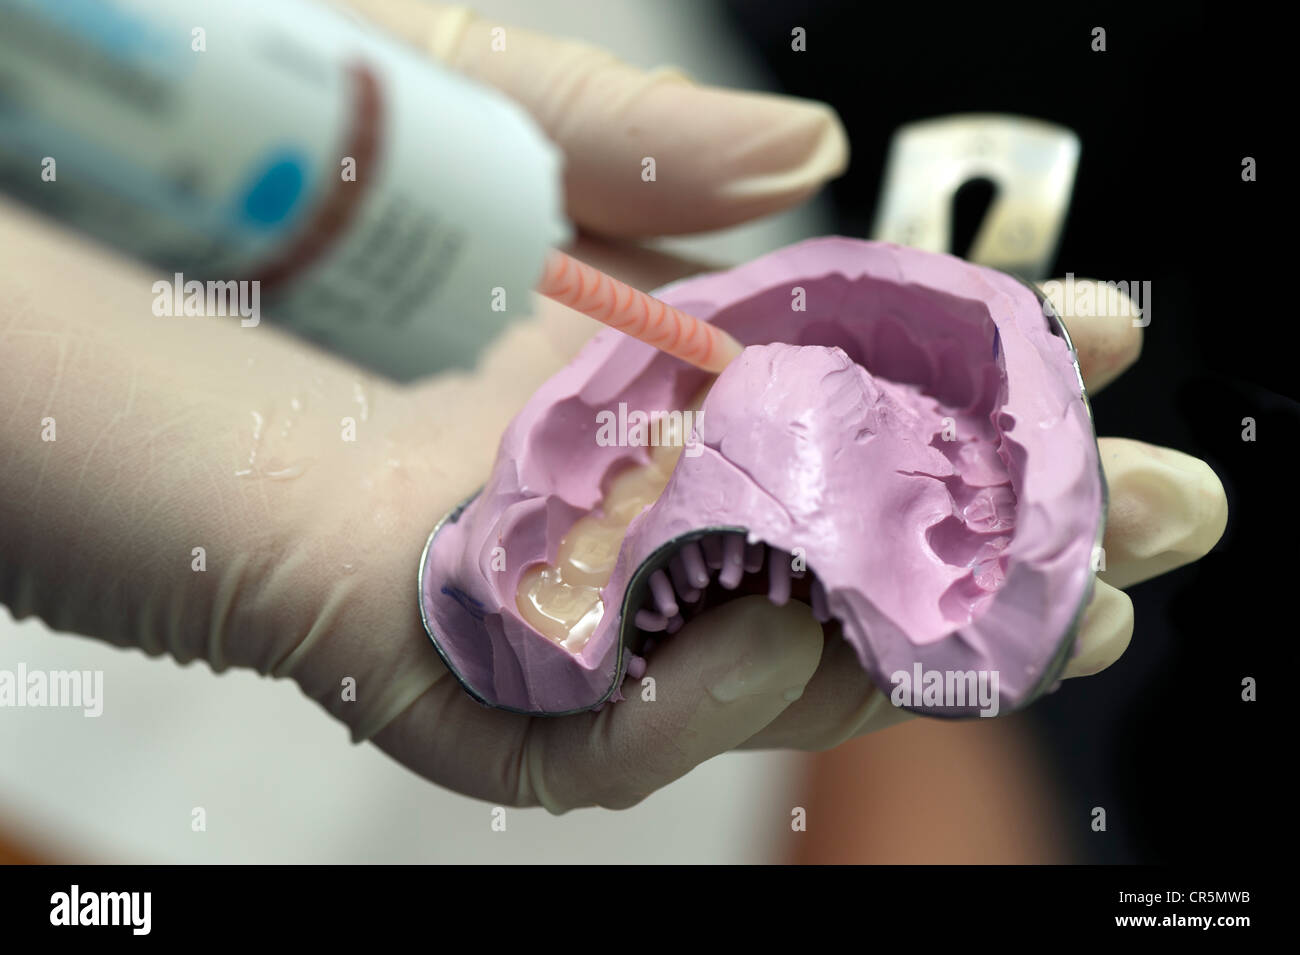 Provisional impression of the maxilla during dental treatment Stock Photo